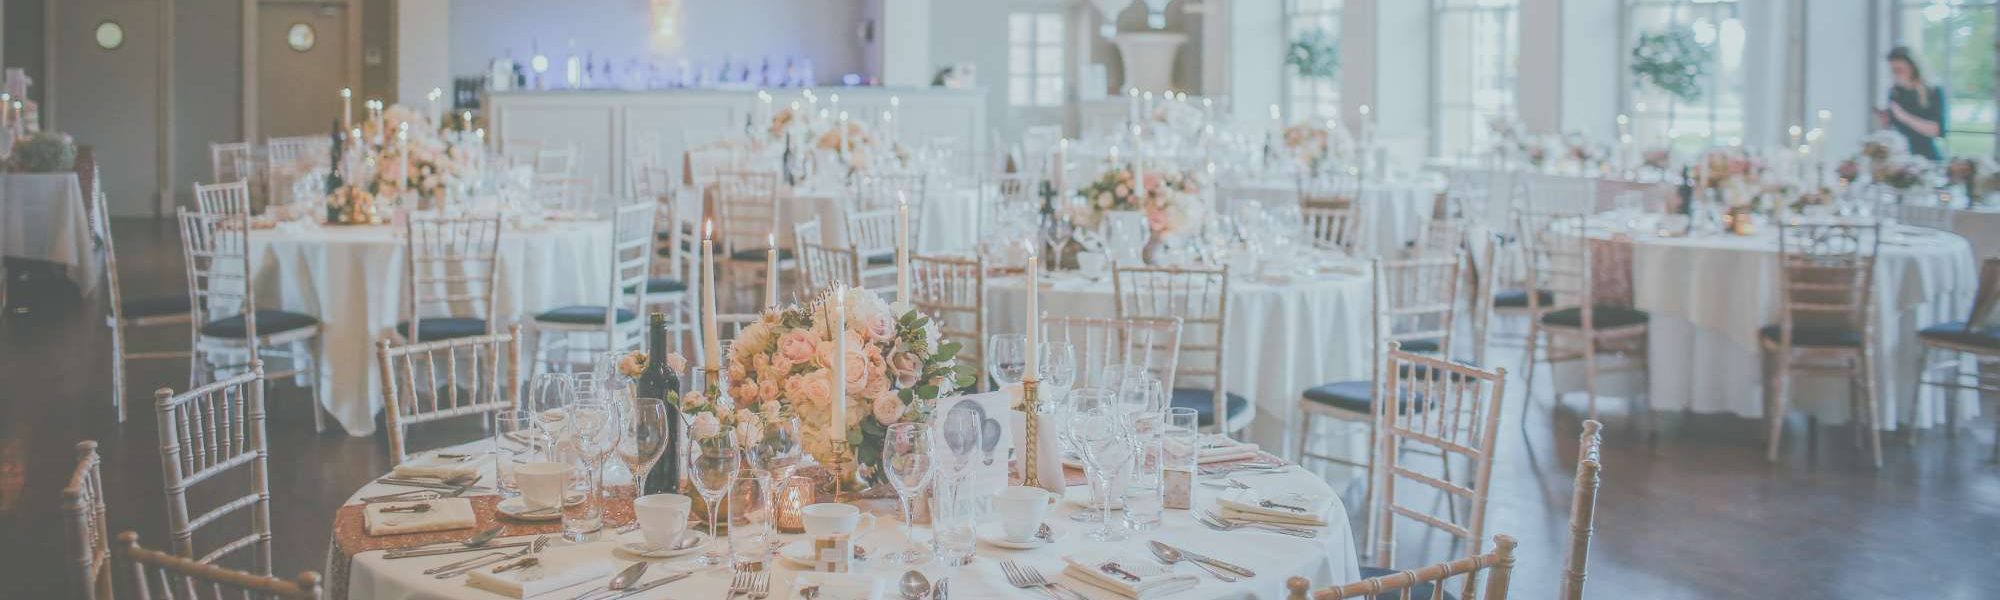 wedding reception with floral decor